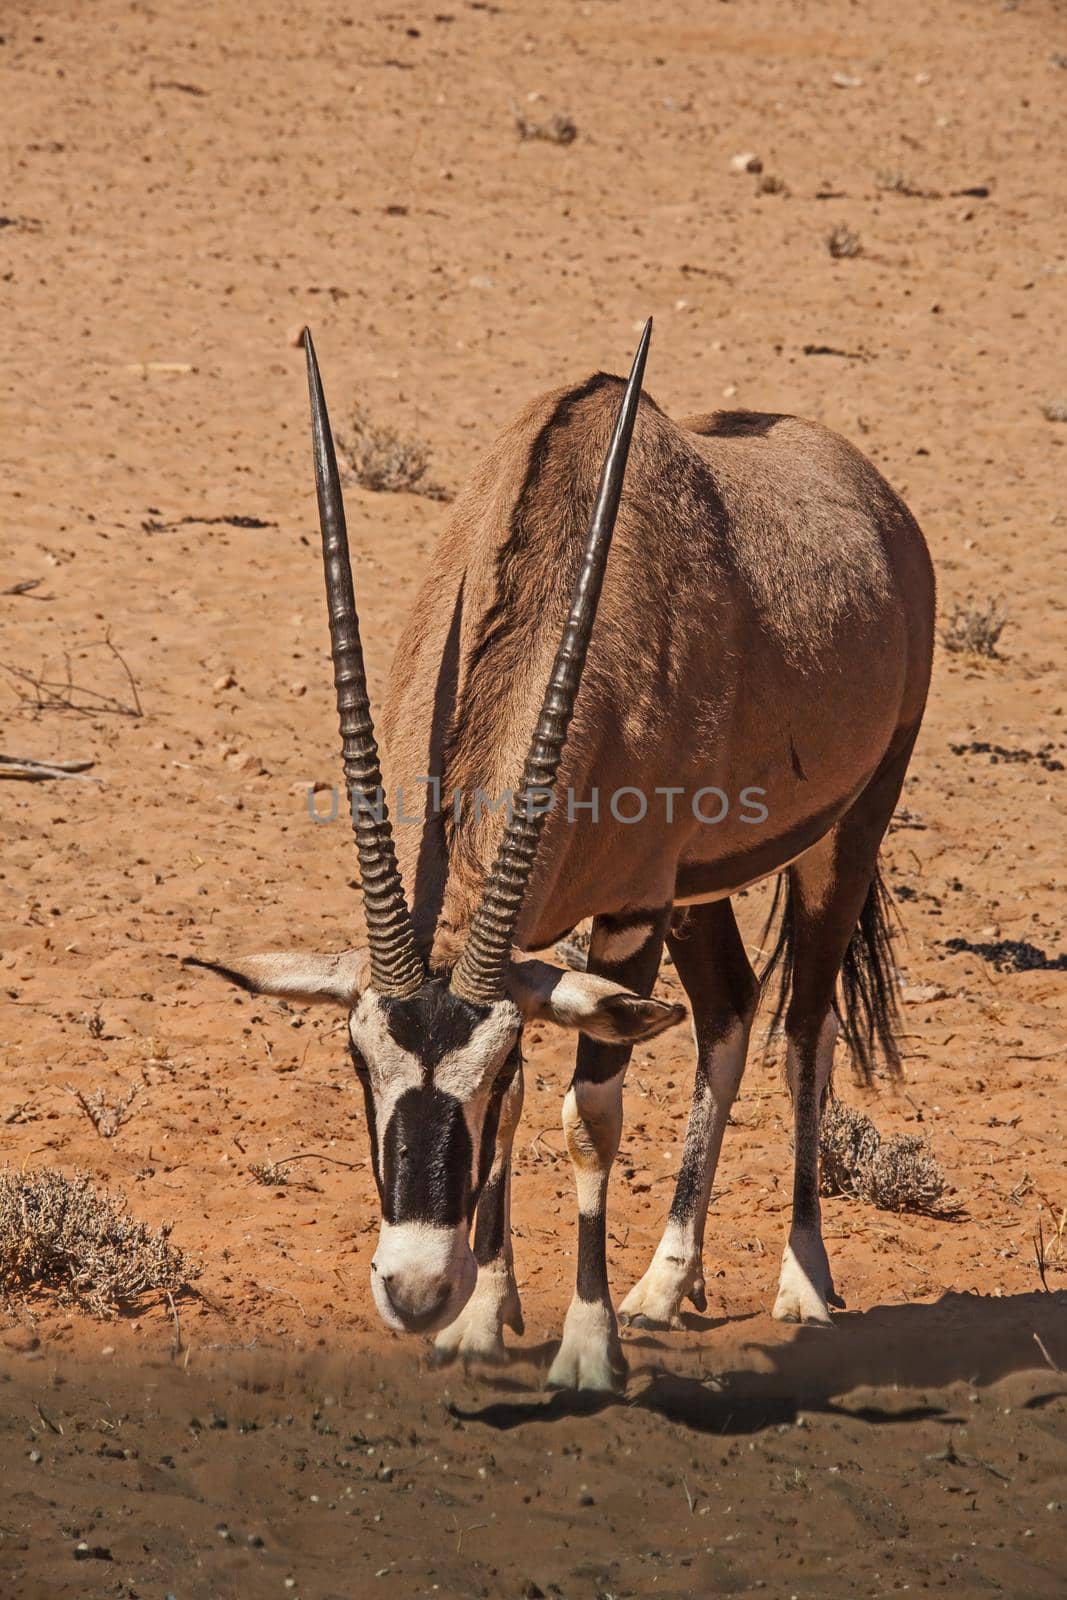 A lone Oryx (Oryx gazella) in the Kalahari desert. Kgalagadi Transfrontier Park. South Africa